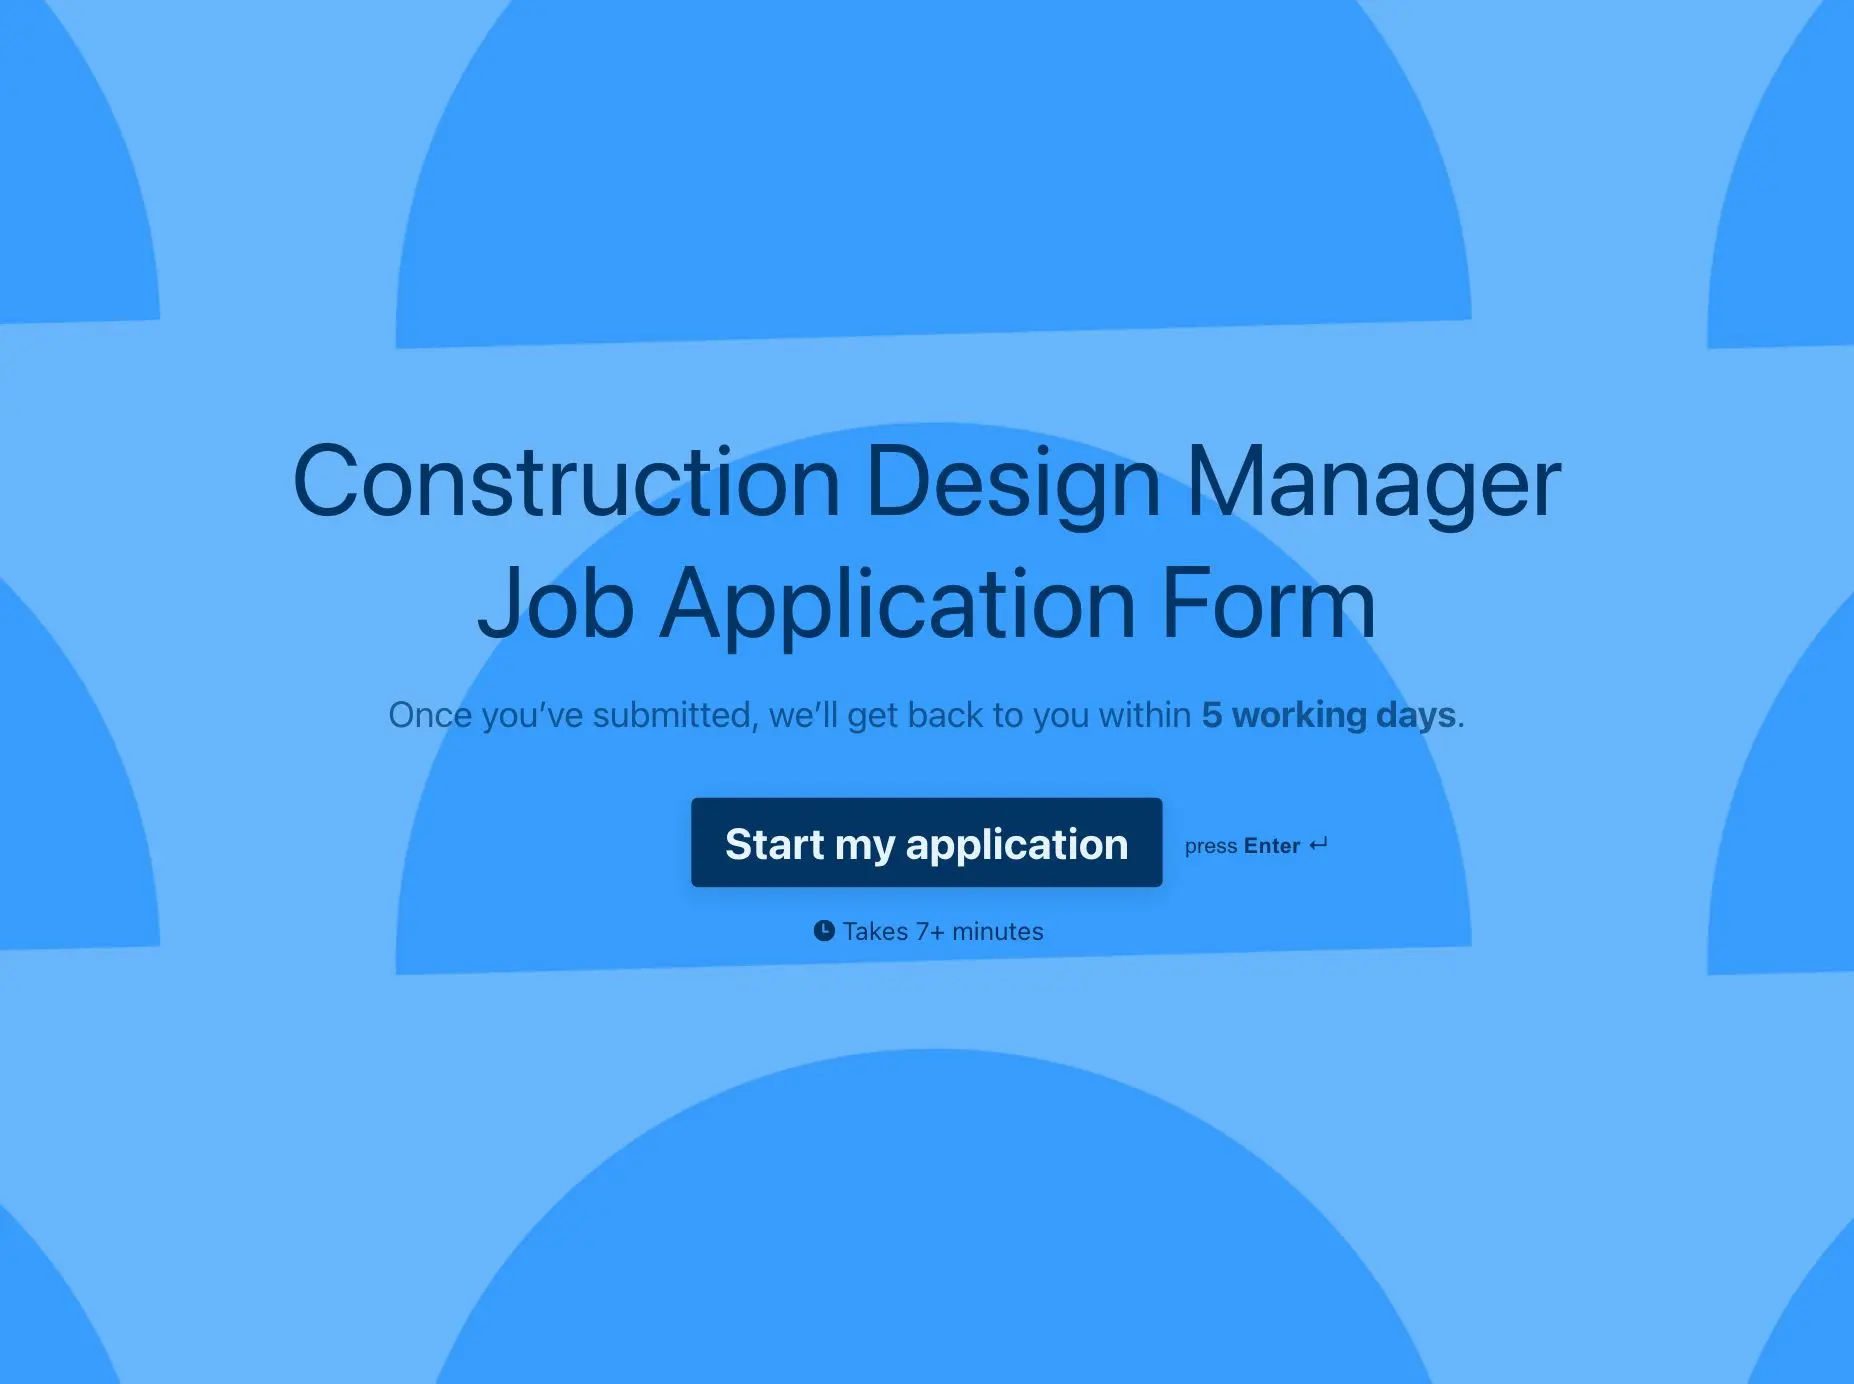 Construction Design Manager Job Application Form Template Hero